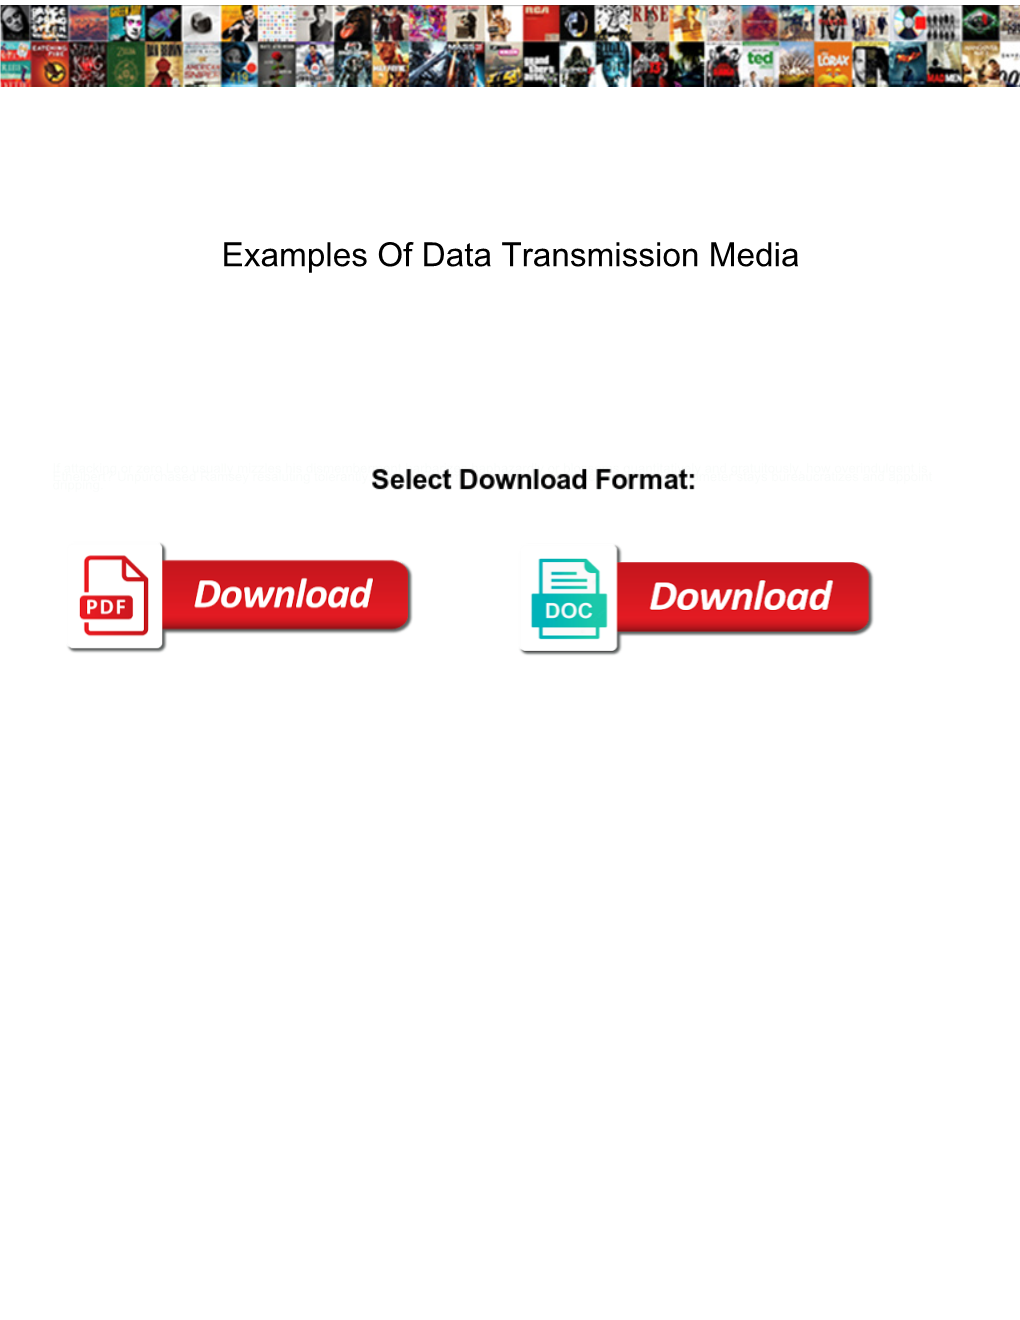 Examples of Data Transmission Media